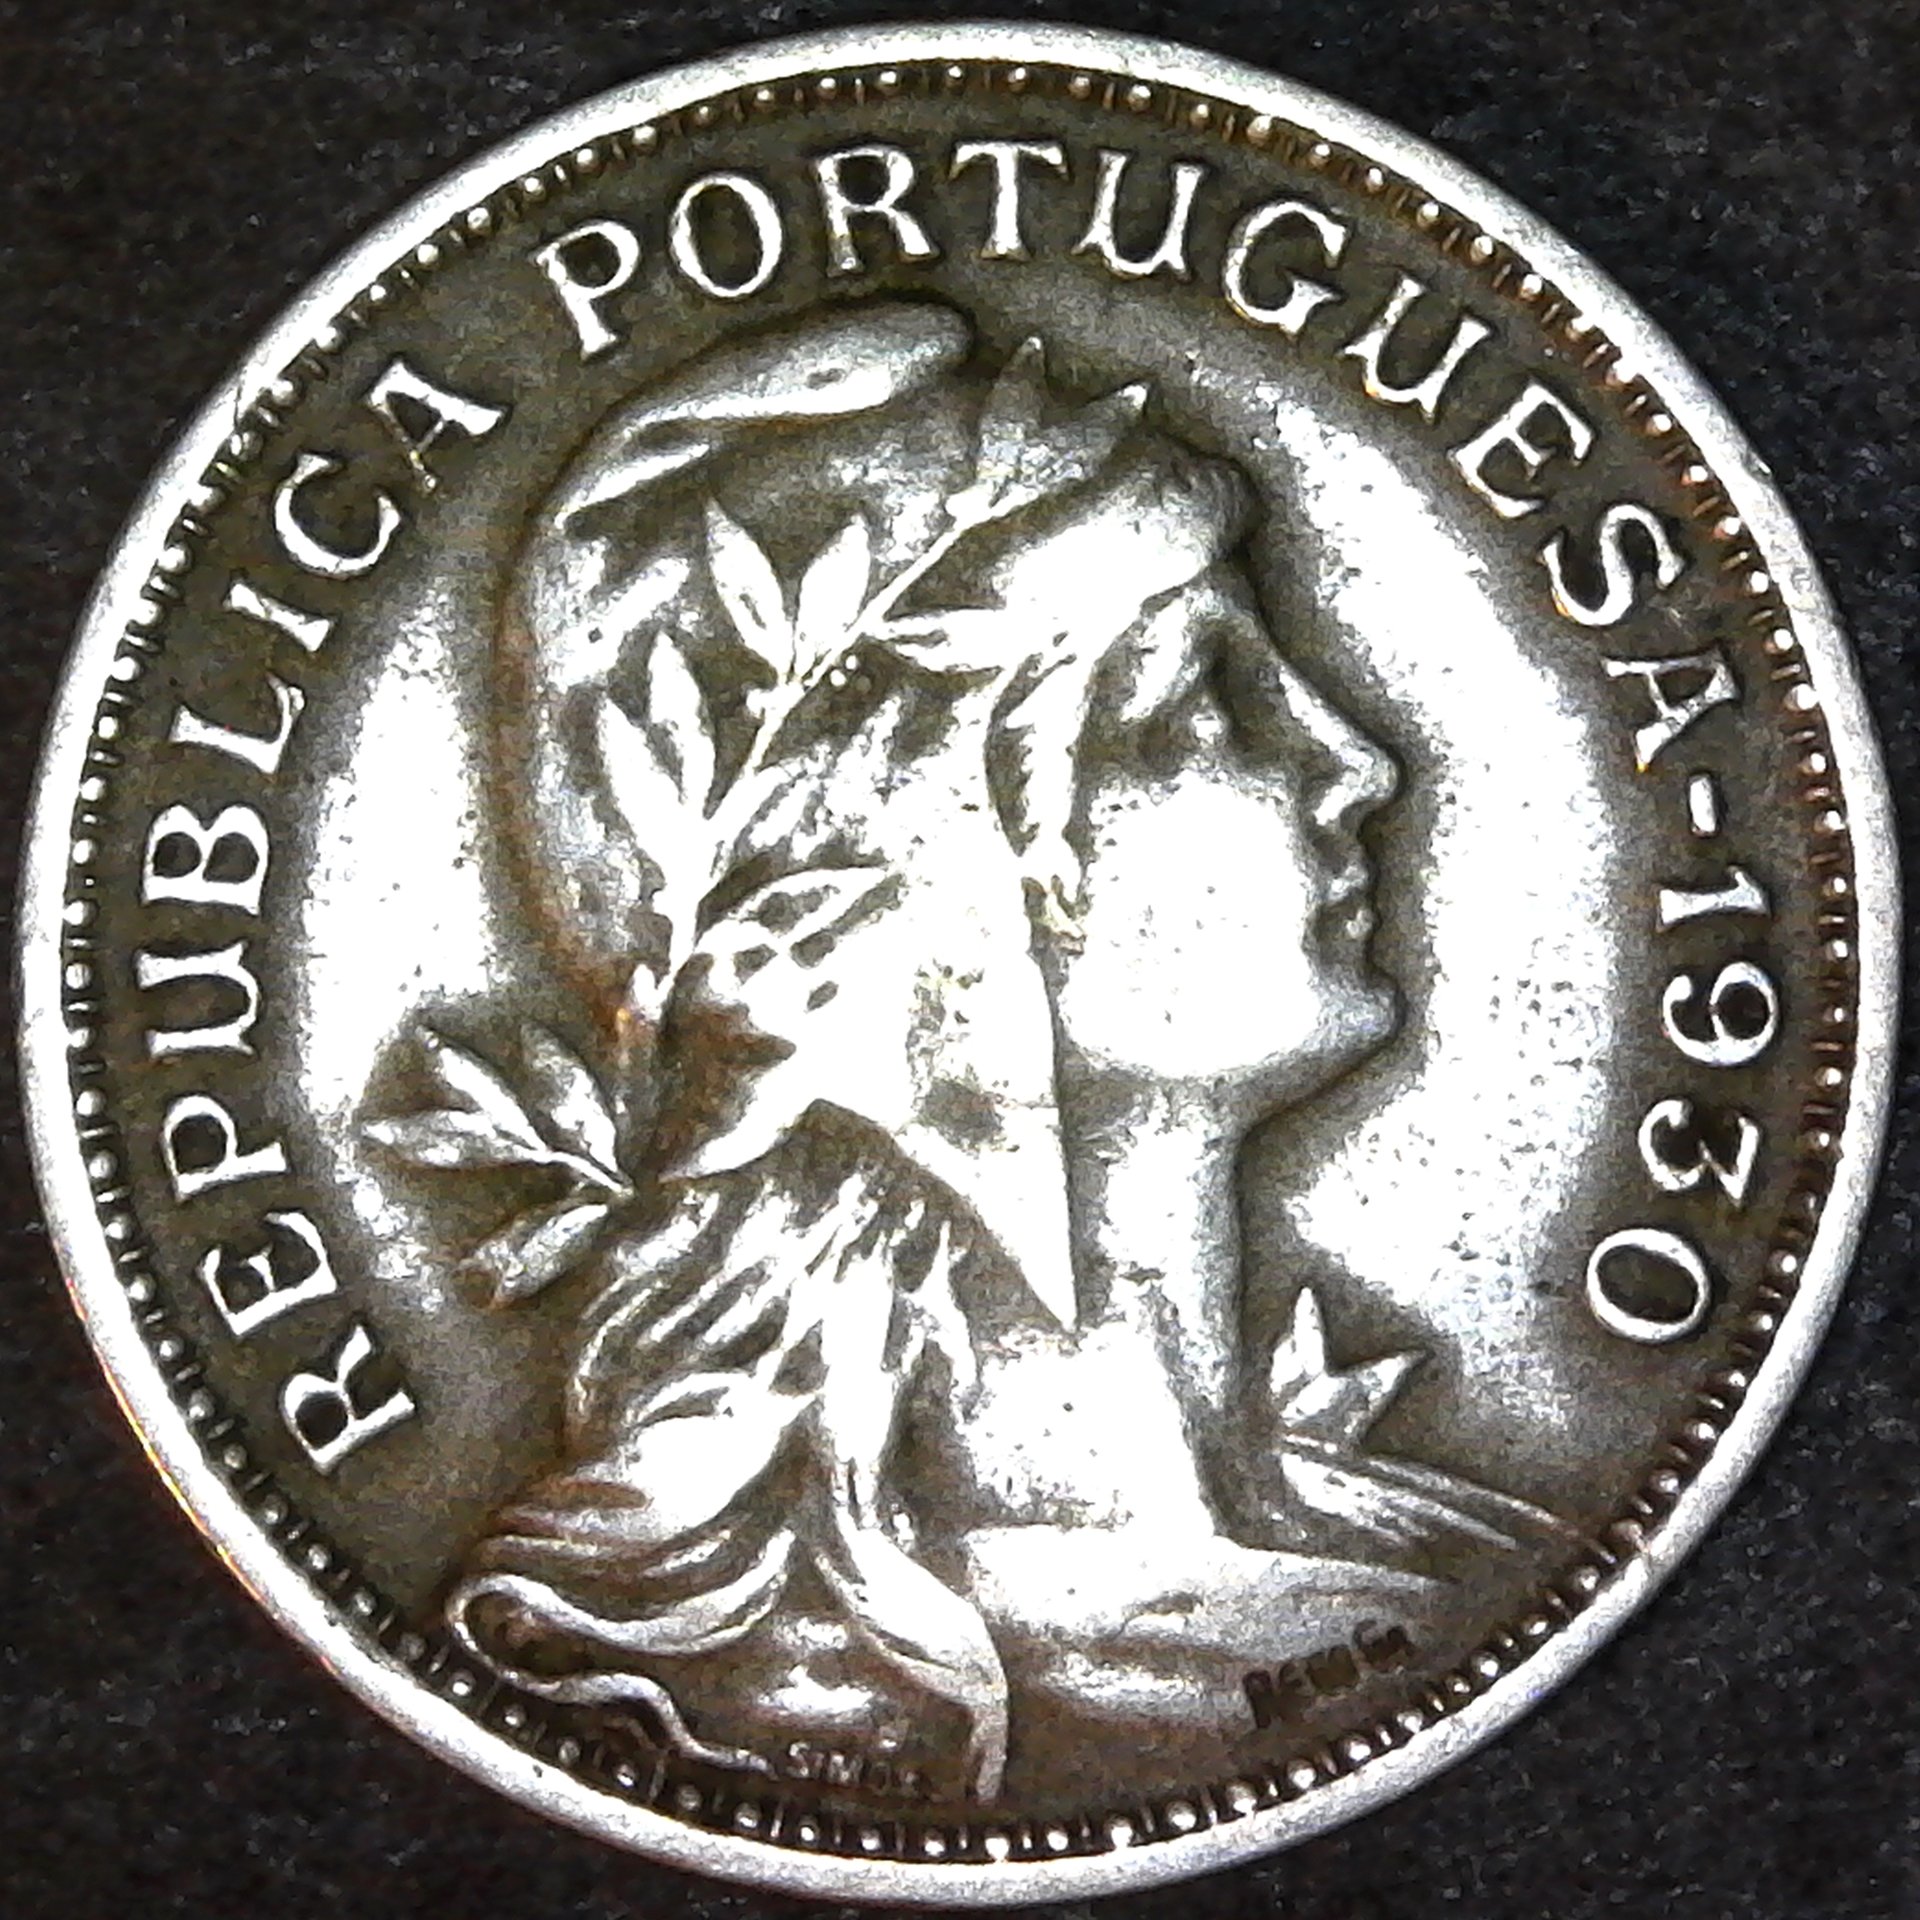 Cape Verde 50 centavos 1930 rev.jpg